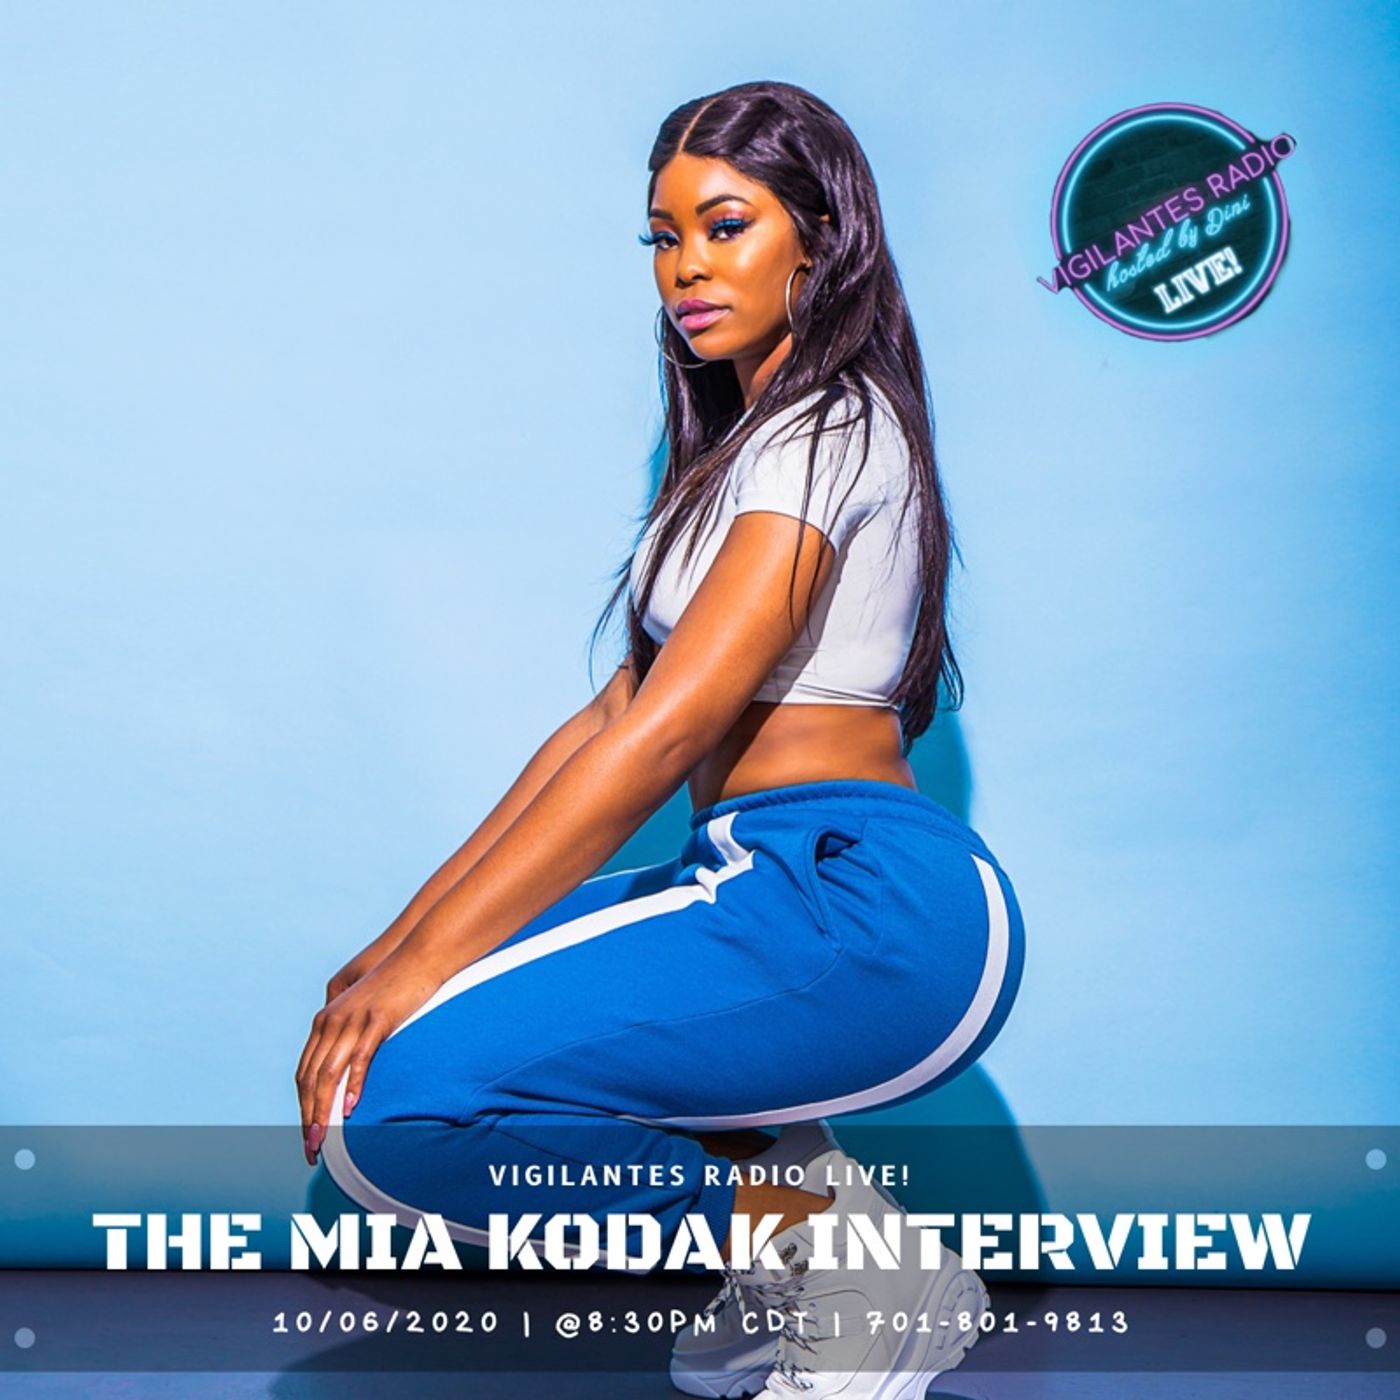 The Mia Kodak Interview. Image